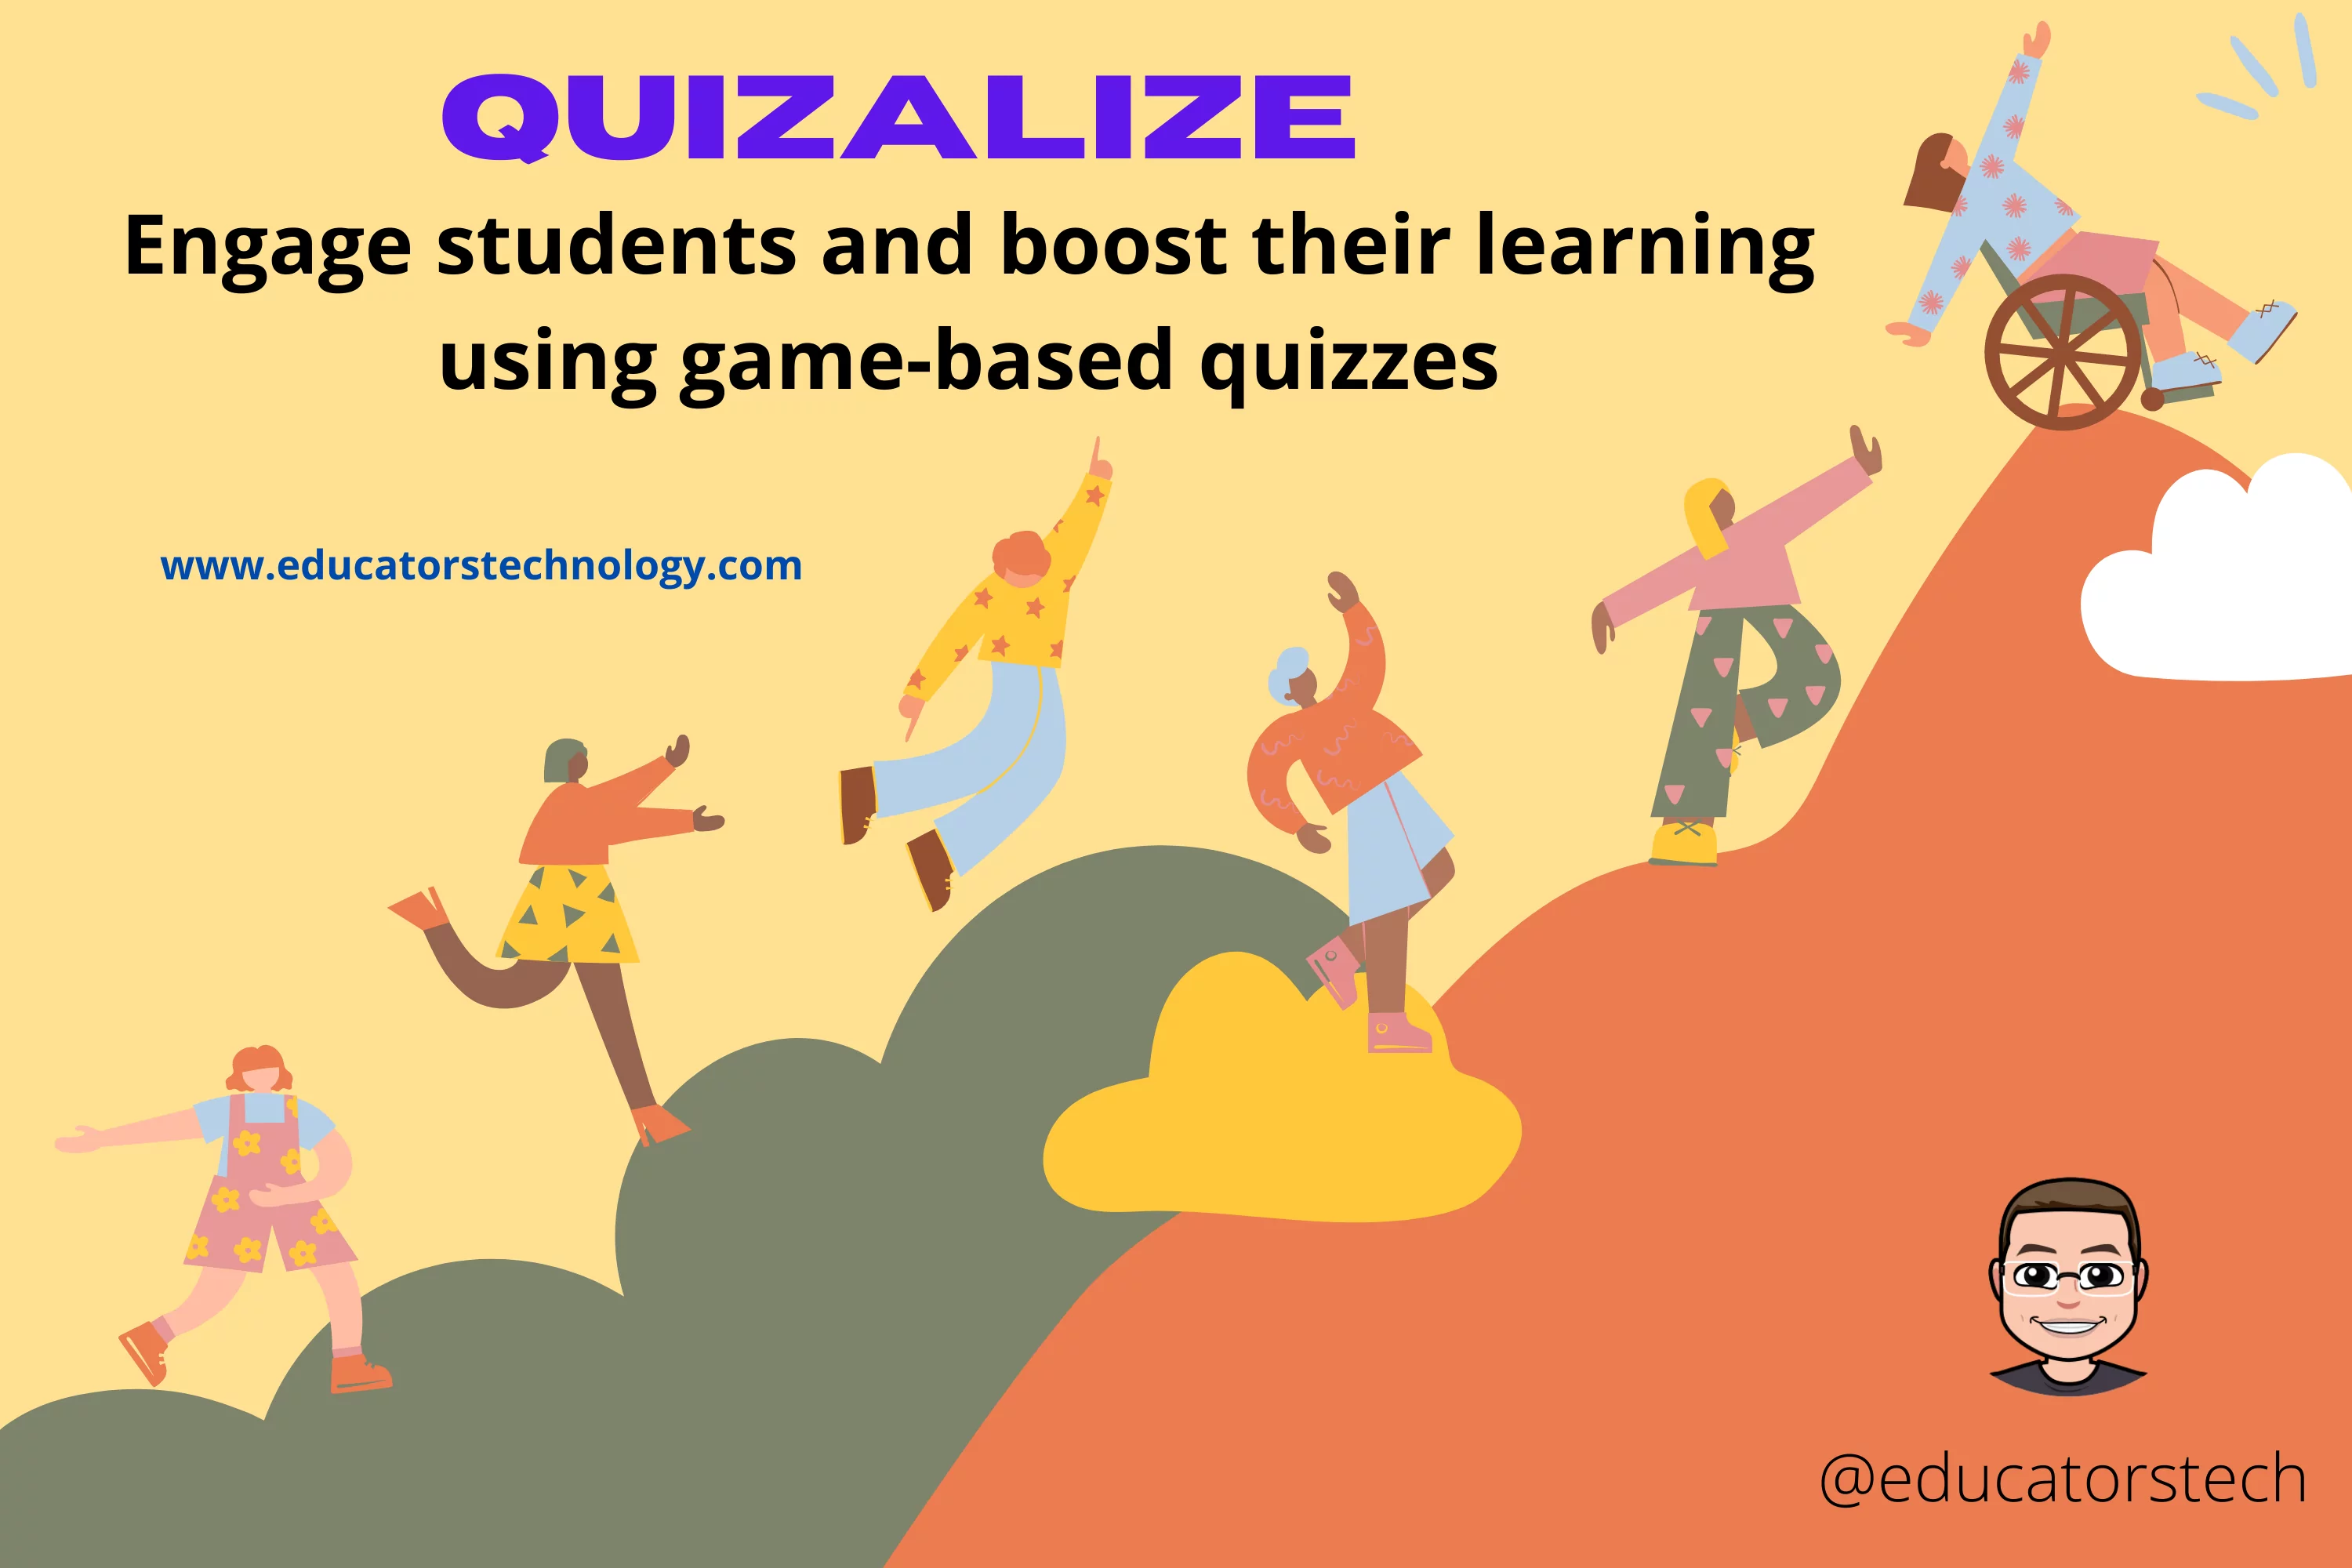 quizalize:Quiz-based games